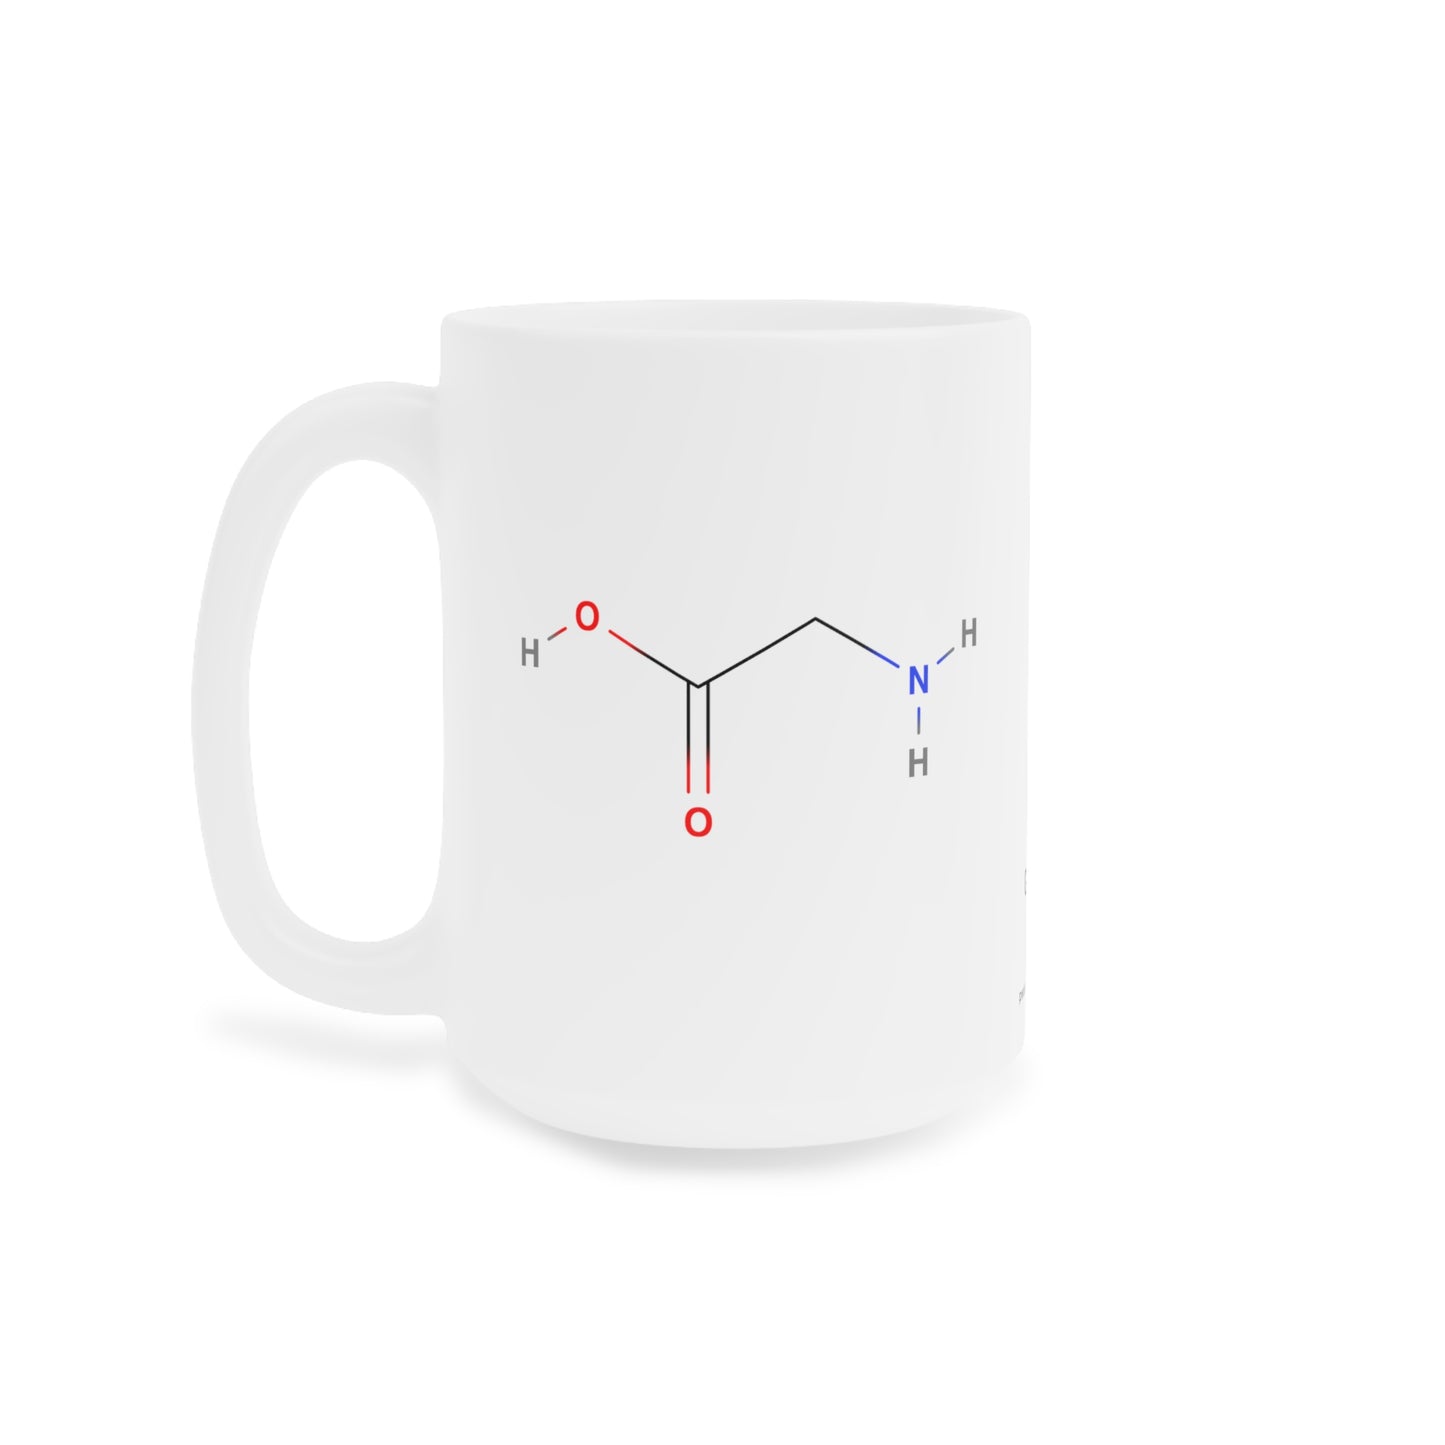 Coffee Mug 15oz - Glycine